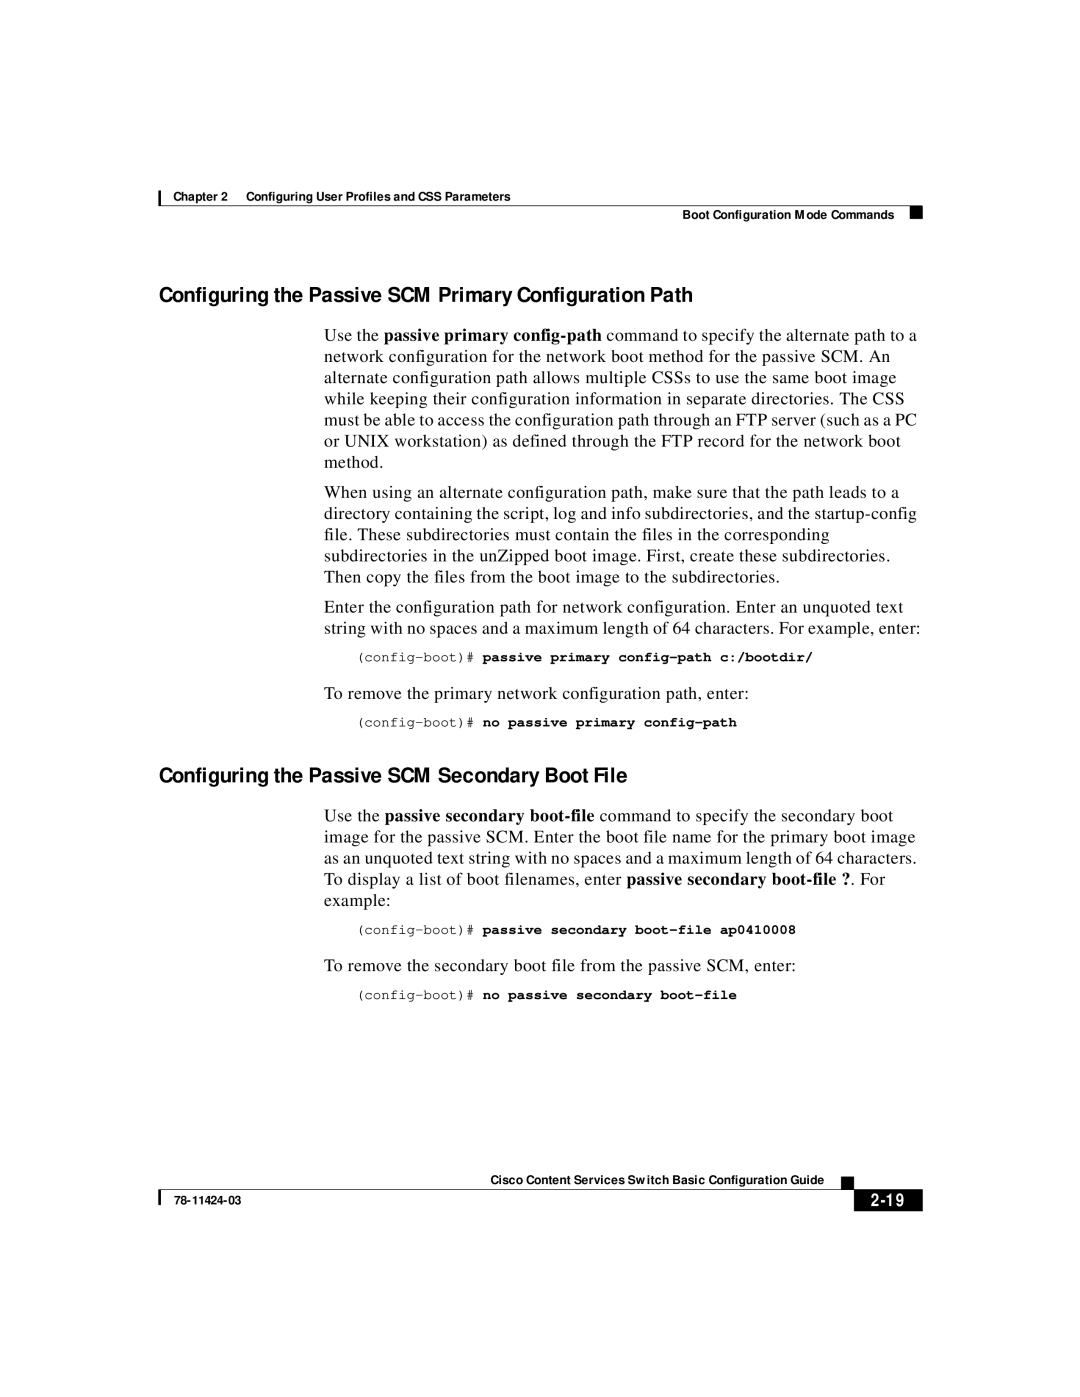 Cisco Systems 78-11424-03 manual Configuring the Passive SCM Primary Configuration Path, 2-19 